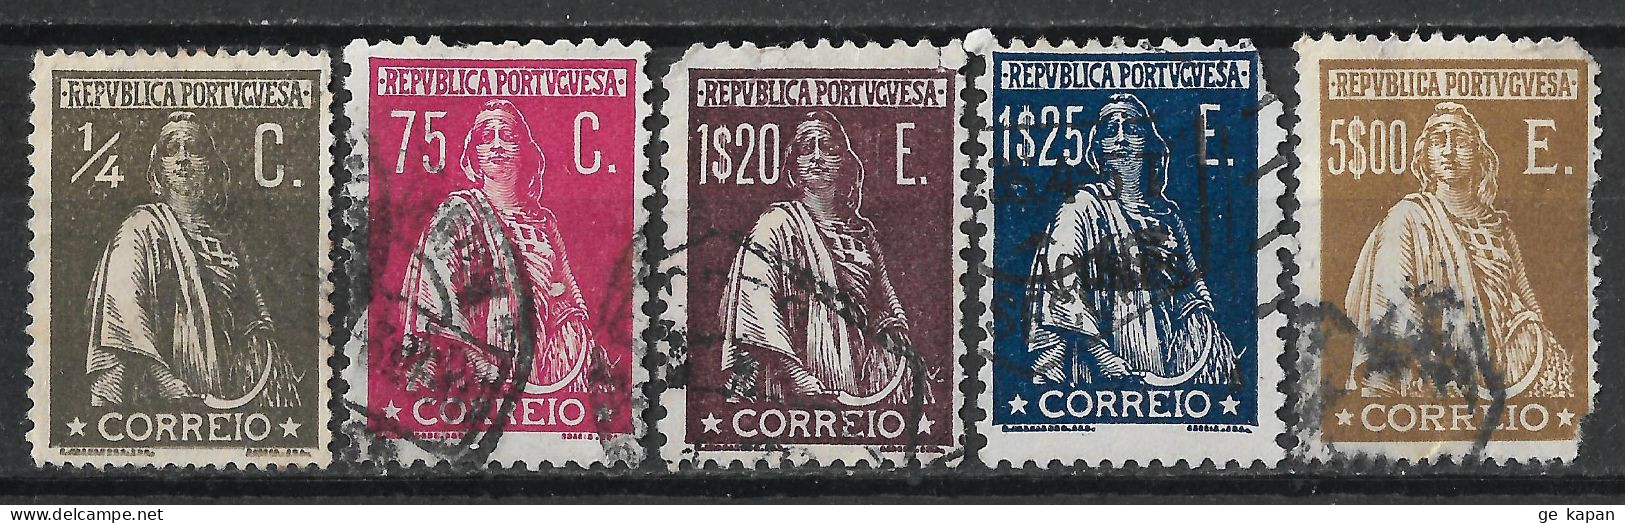 1912-1930 PORTUGAL SET OF 5 USED STAMPS (Michel # 204Ax,428,524,527,528) CV €8.30 - Gebruikt